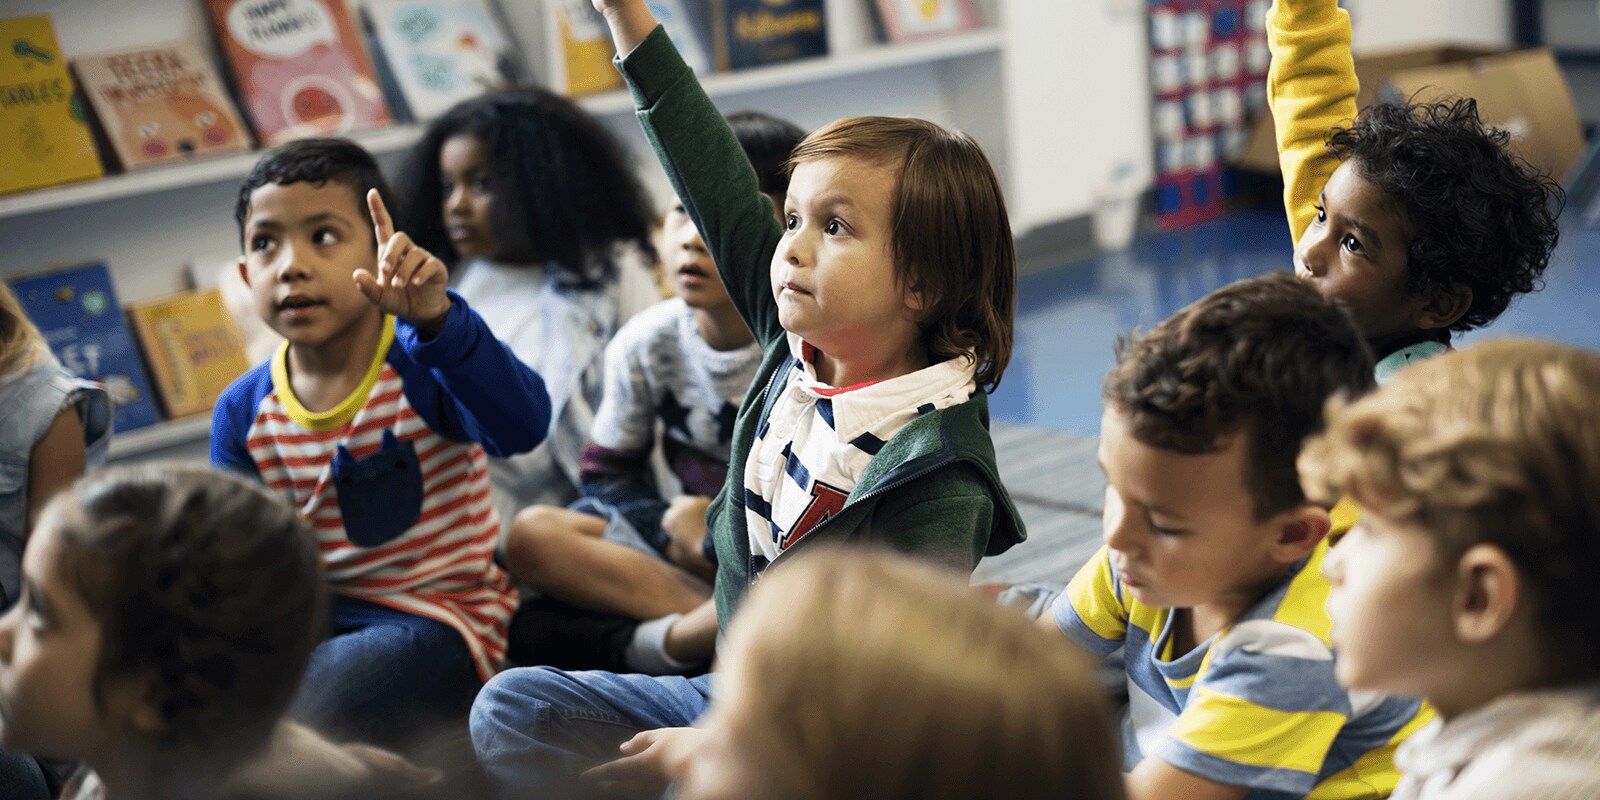 Grade school children in a classroom raising their hand. 